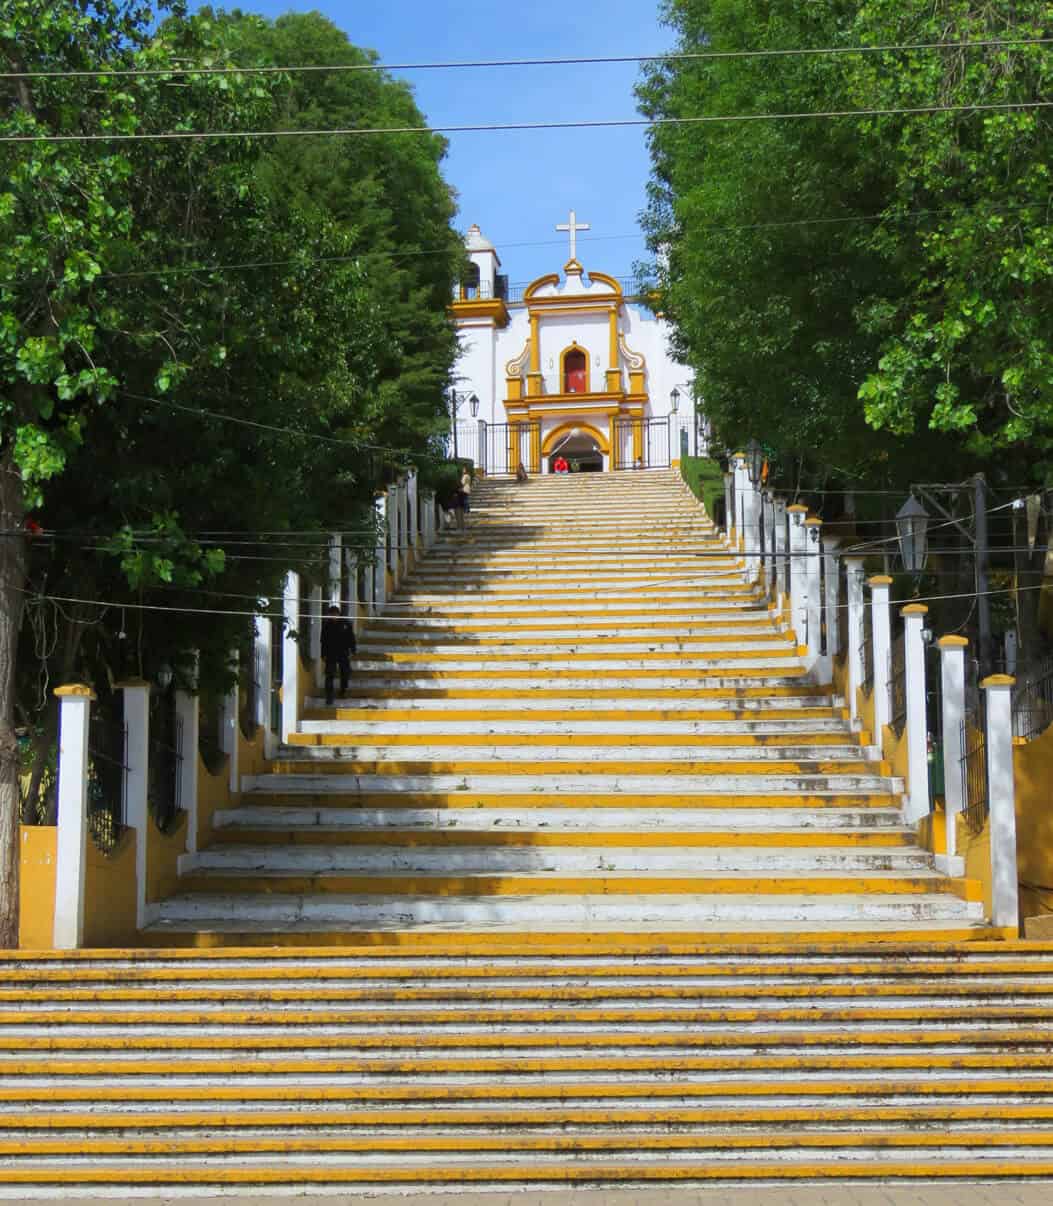 Templo de Guadalupe, san critobal de las casas, mexico